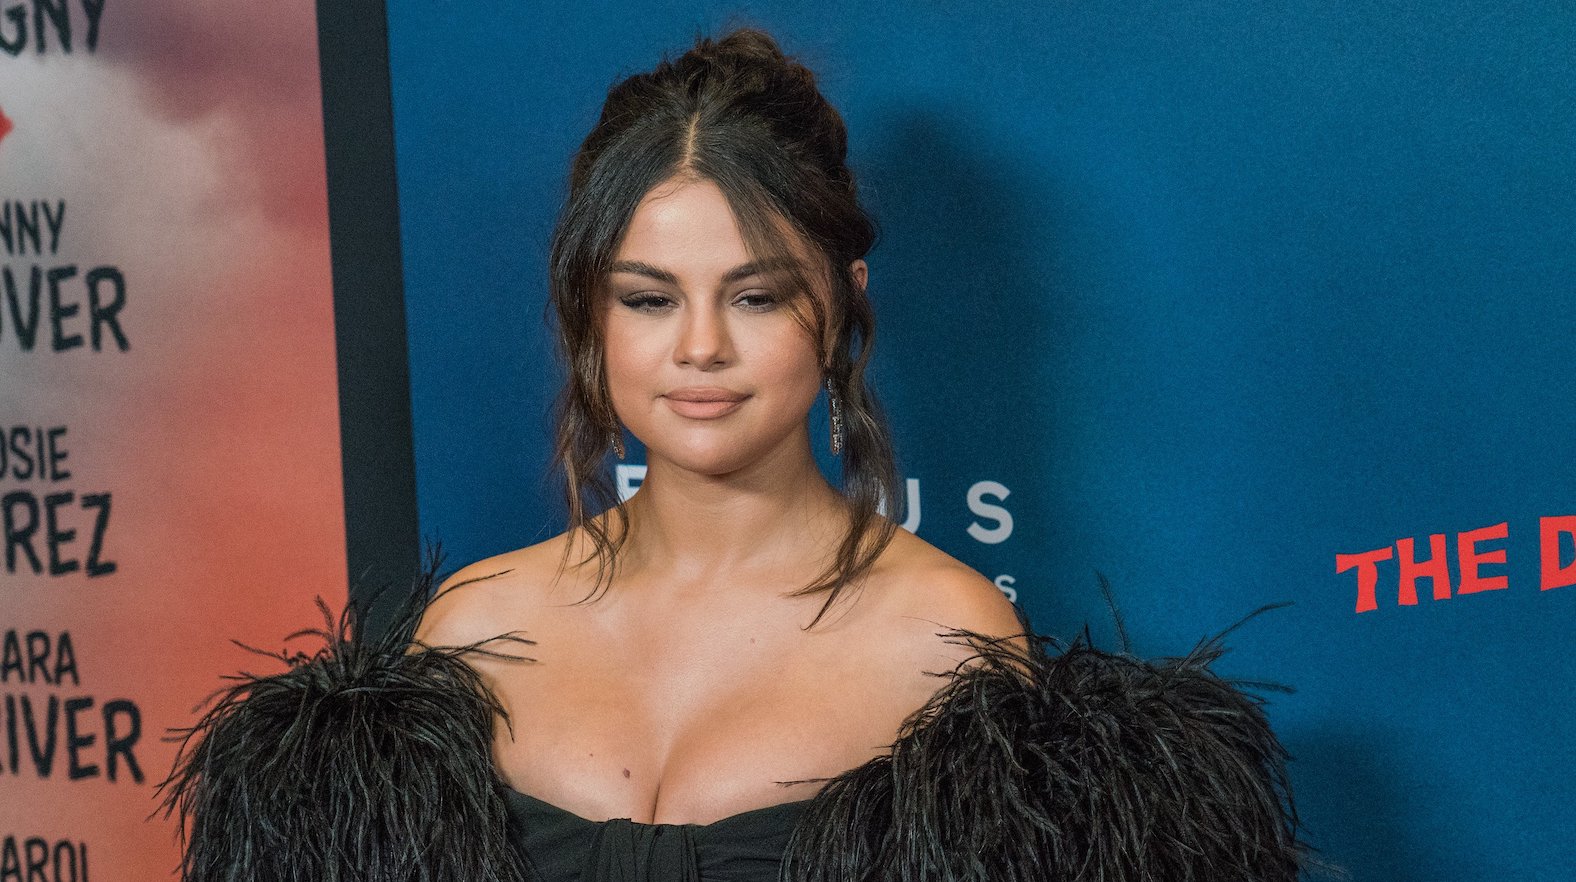 Black Porno Selena Gomez - Selena Gomez in Black Feathered Dress at 'Dead Don't Die' Premiere